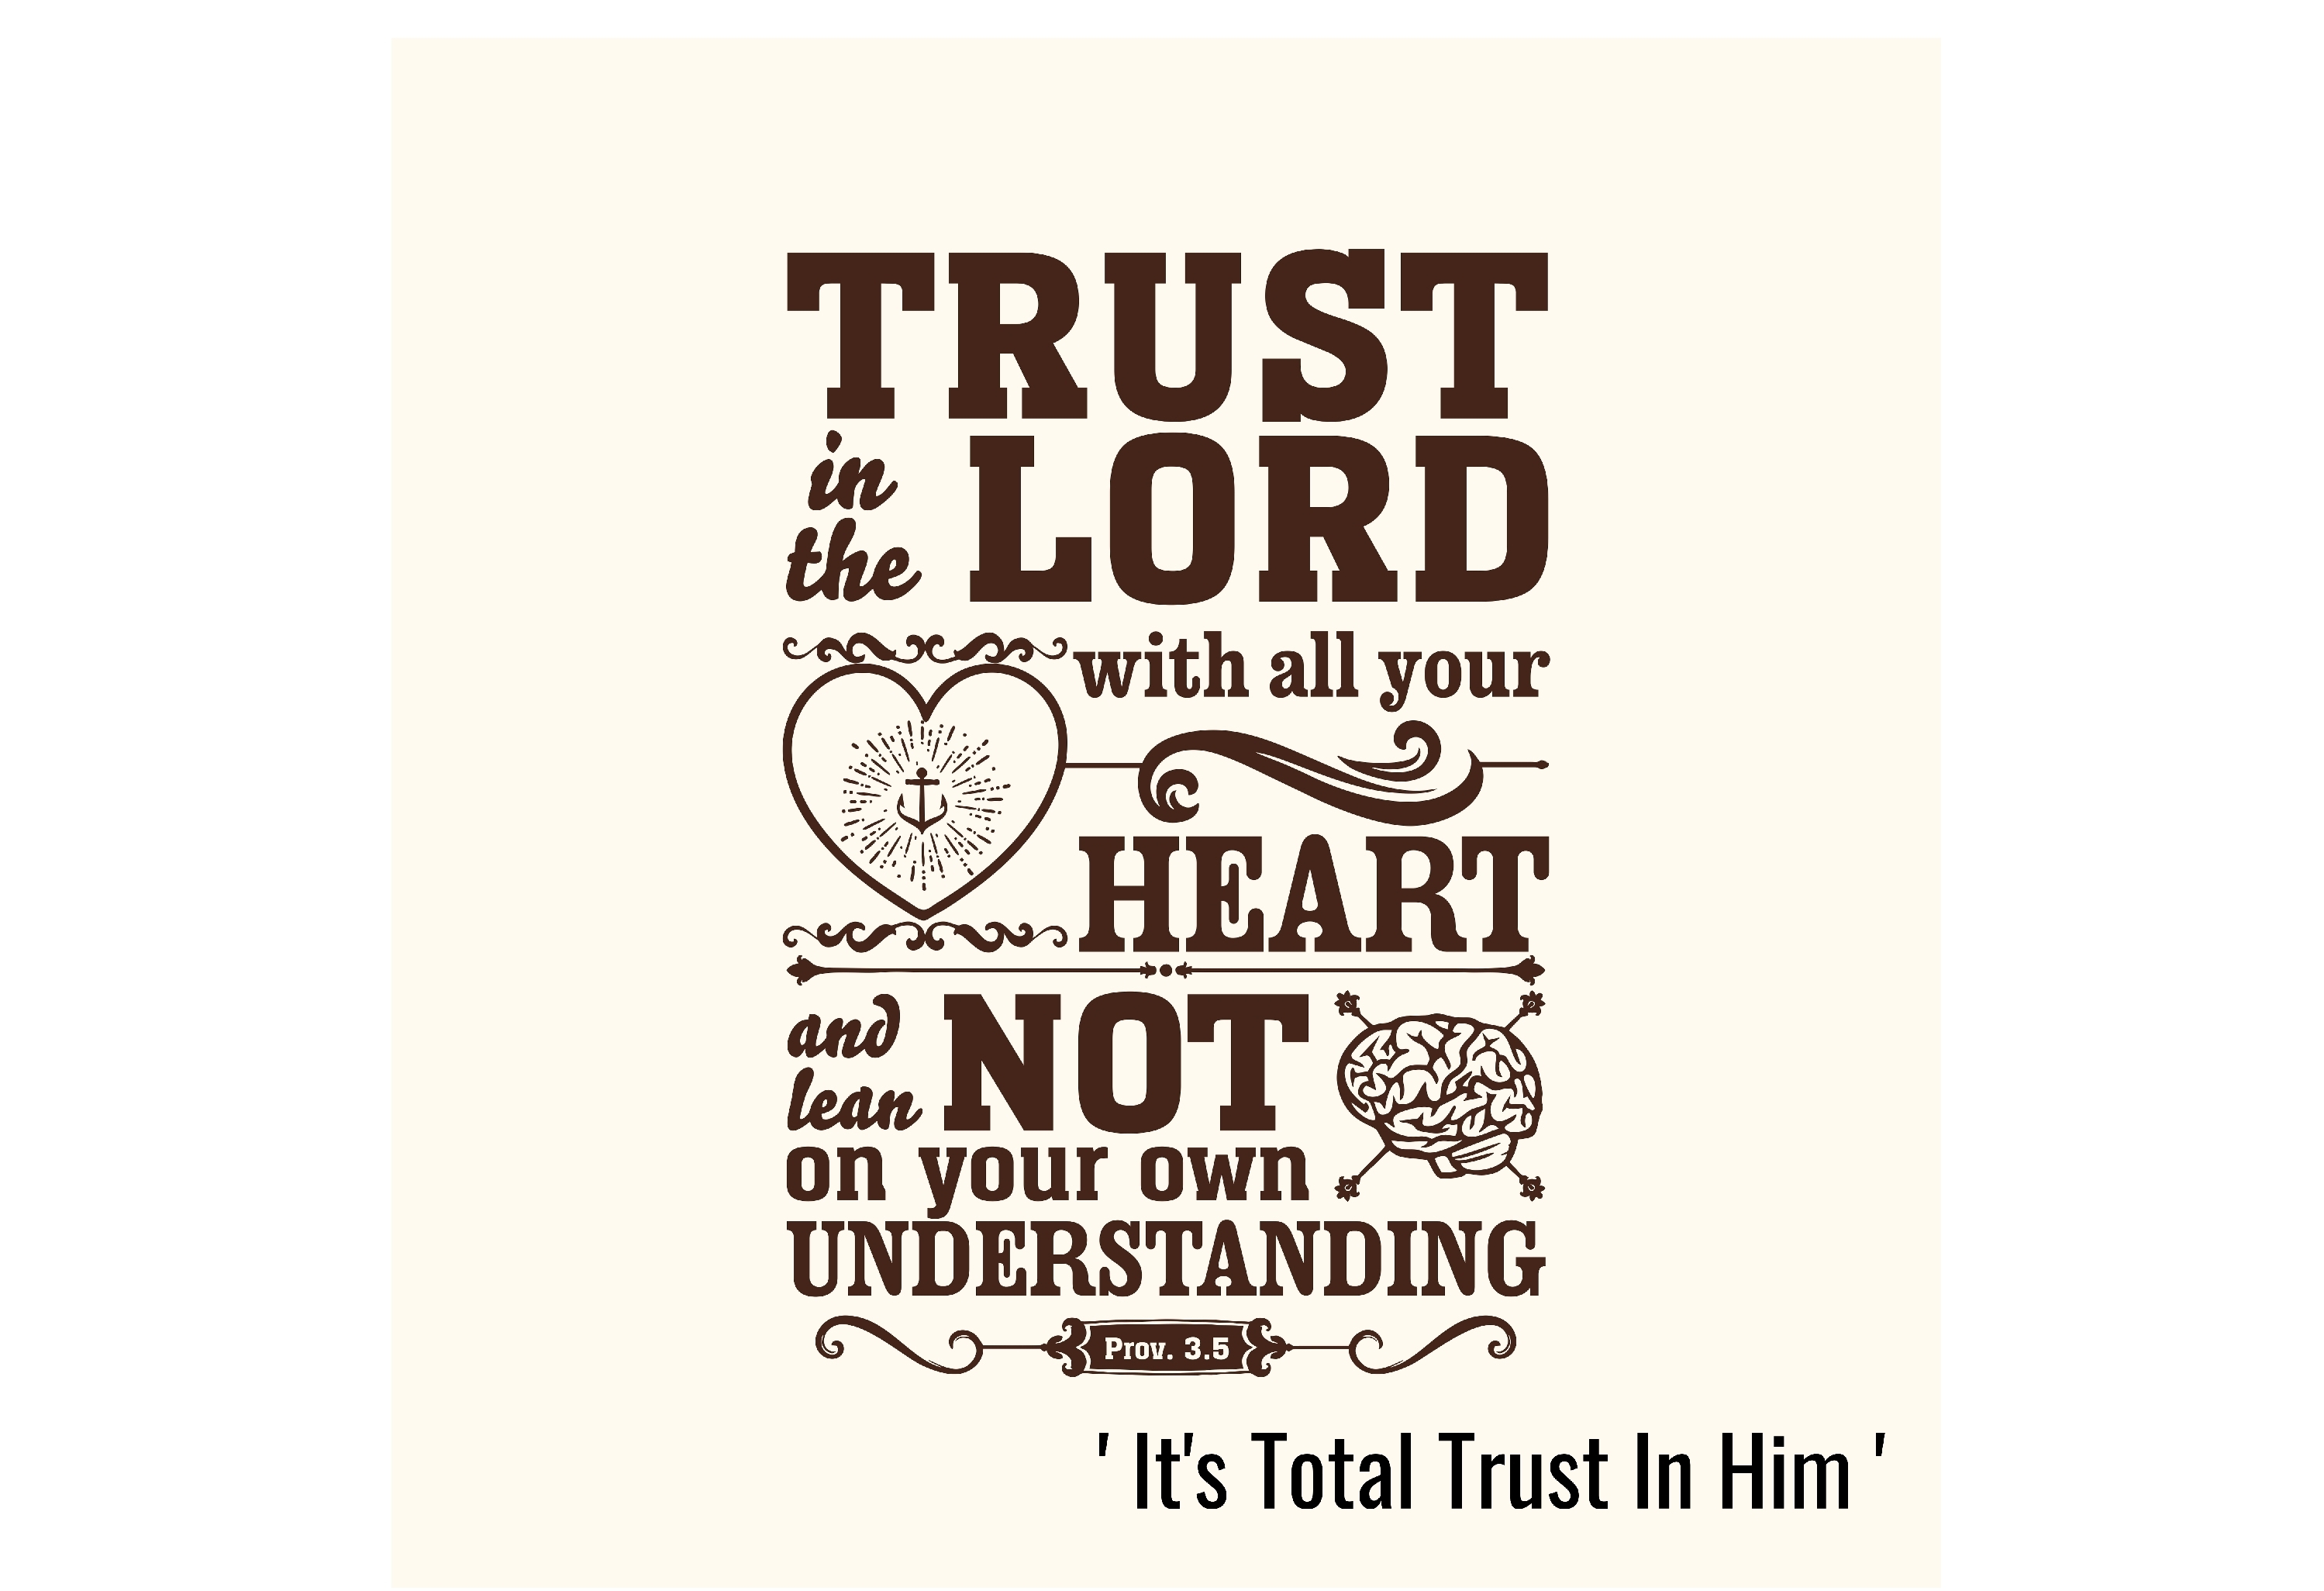 It’s Total Trust In Him